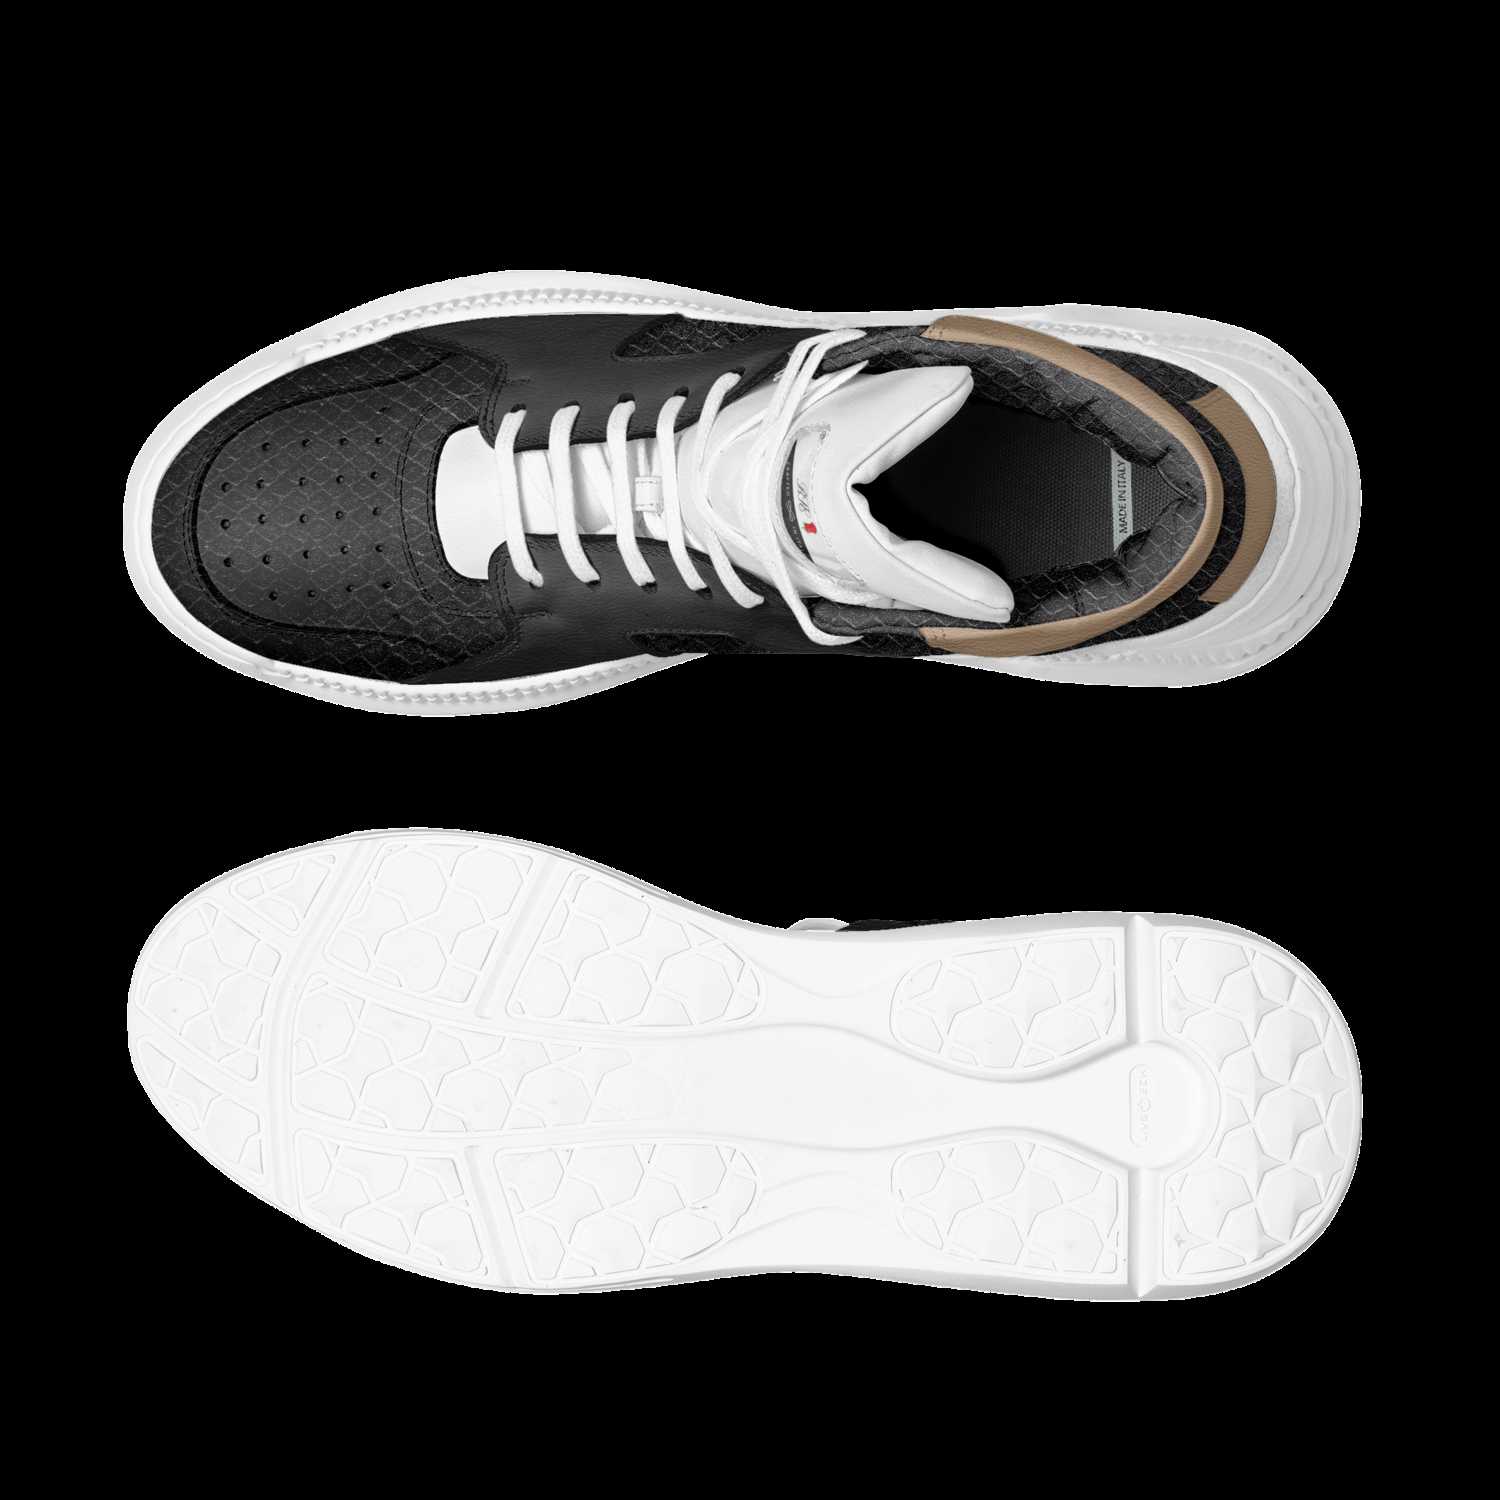 Michael Kors Ballard Training Shoes | Sneakers | Shoes | Shop The Exchange